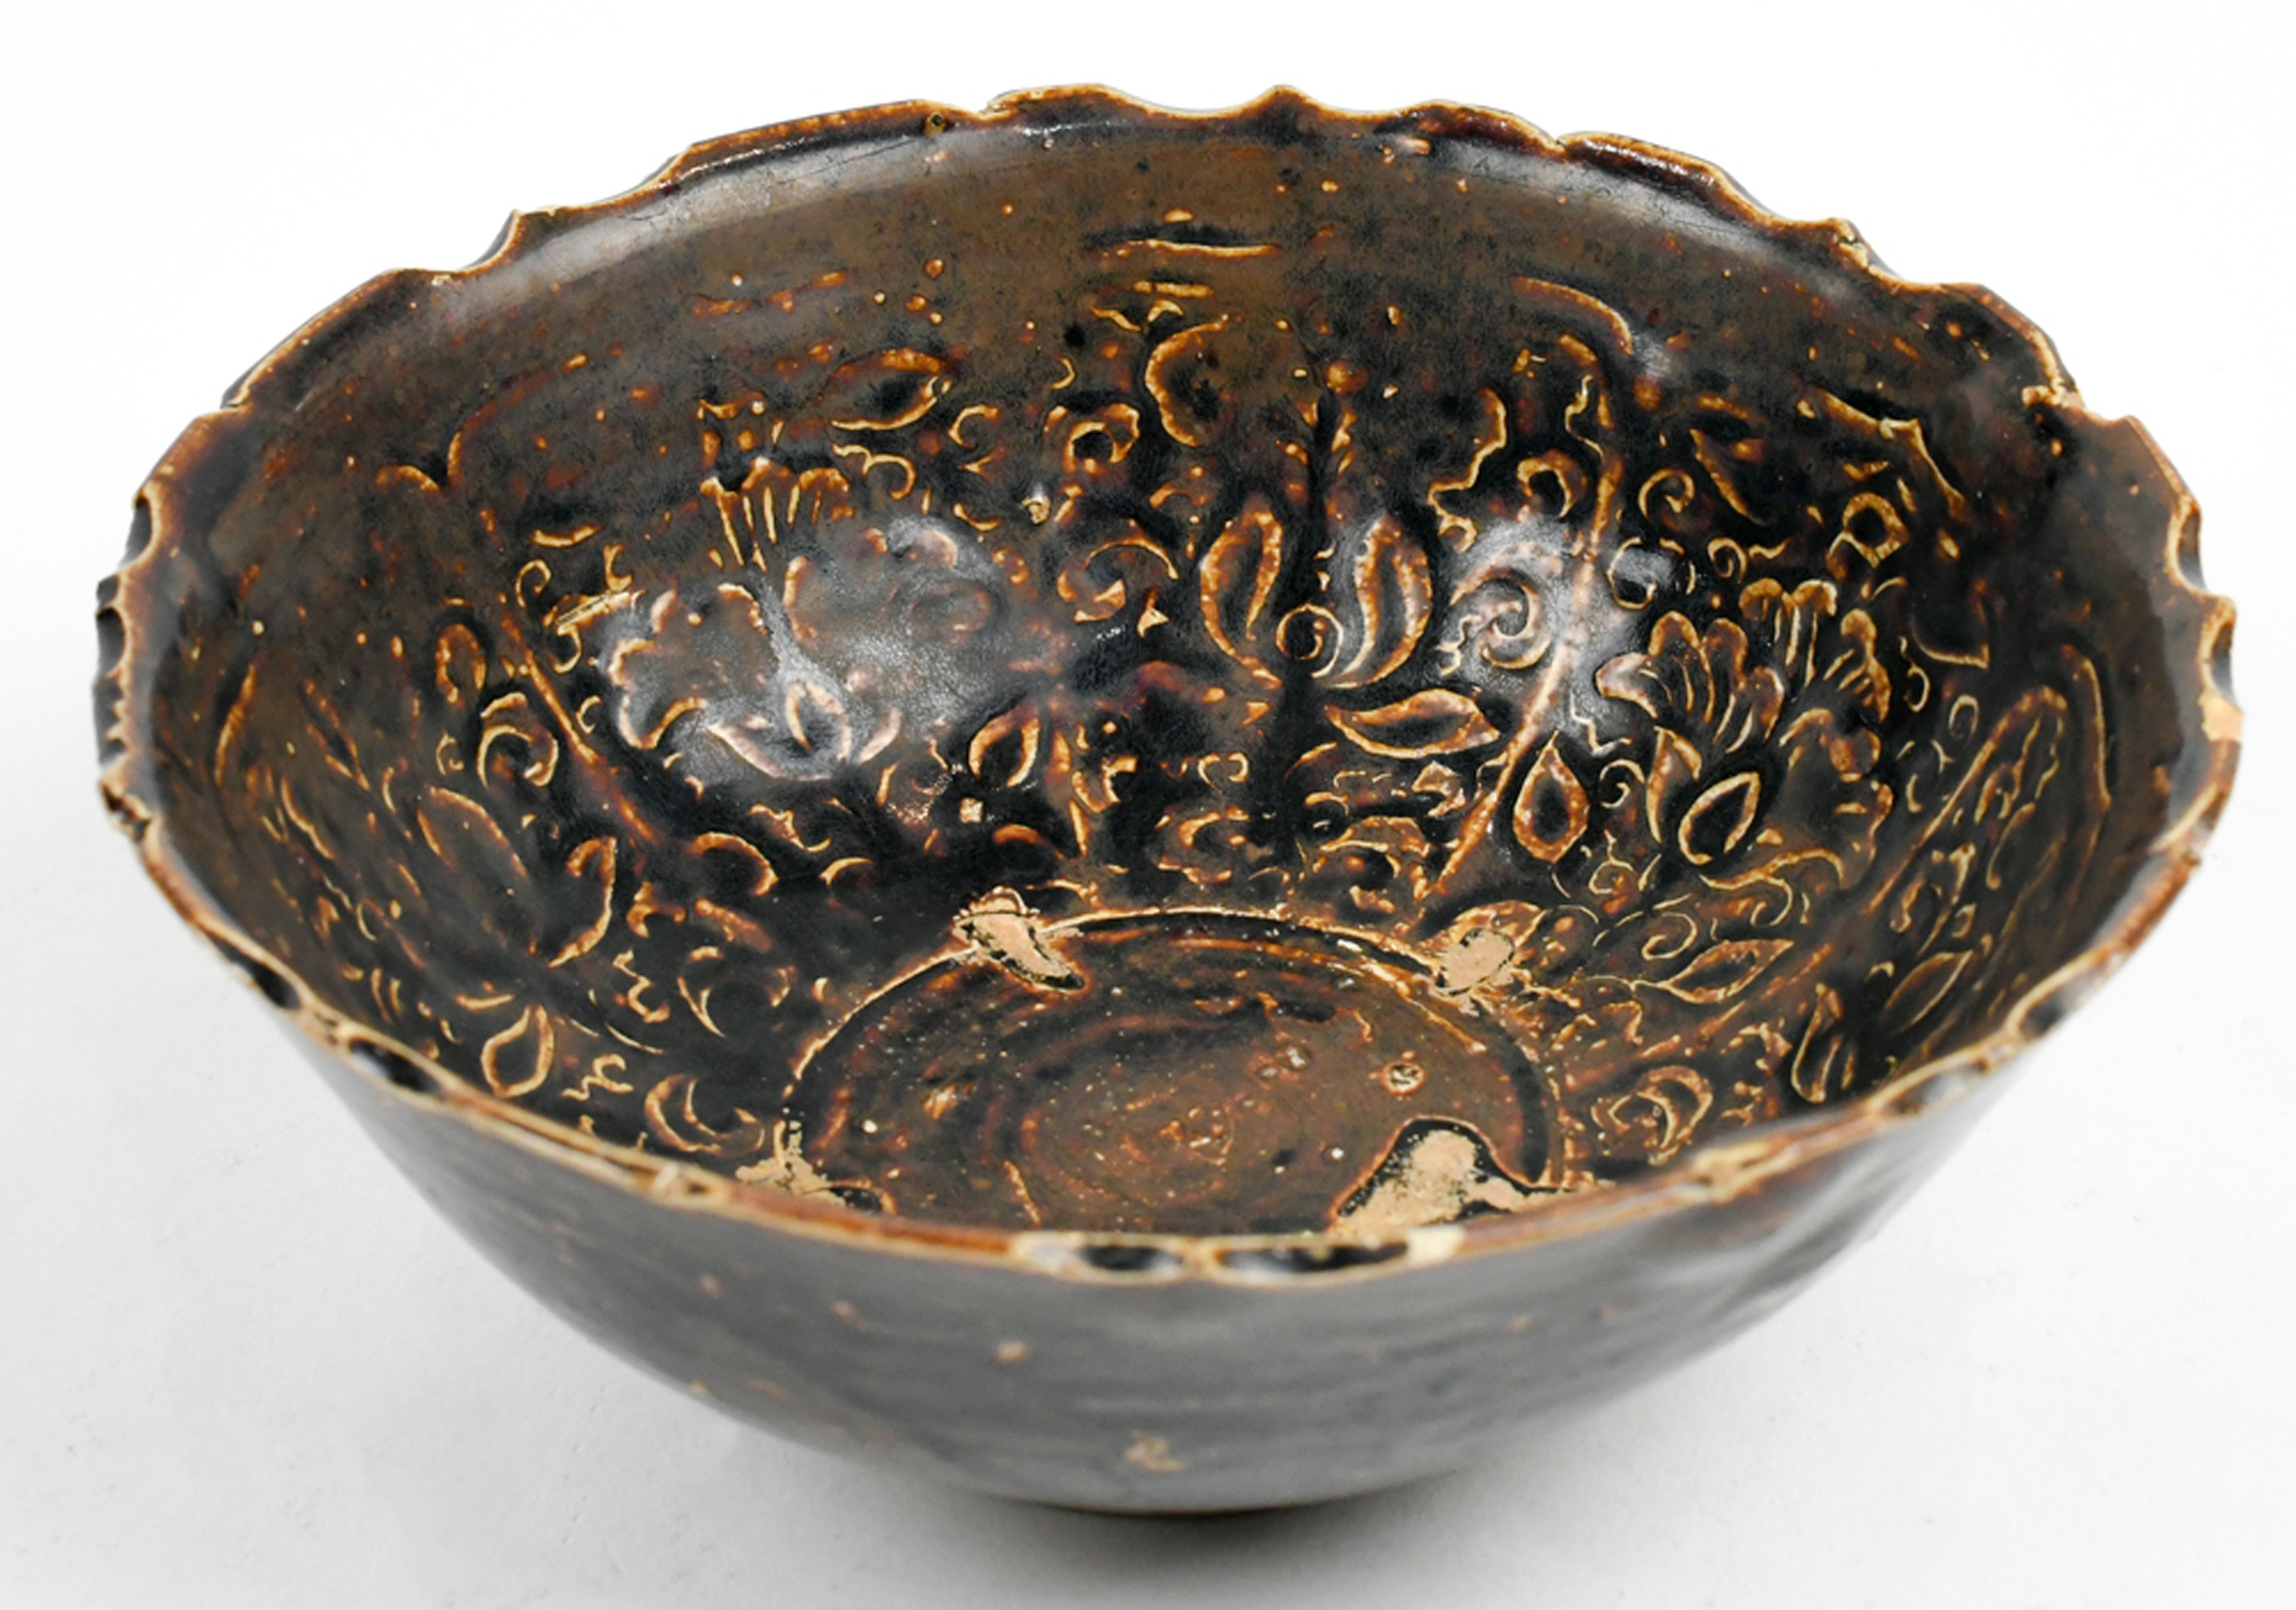 (3) Vietnamese Tran Brown Glaze Ceramic Bowls - Image 2 of 3